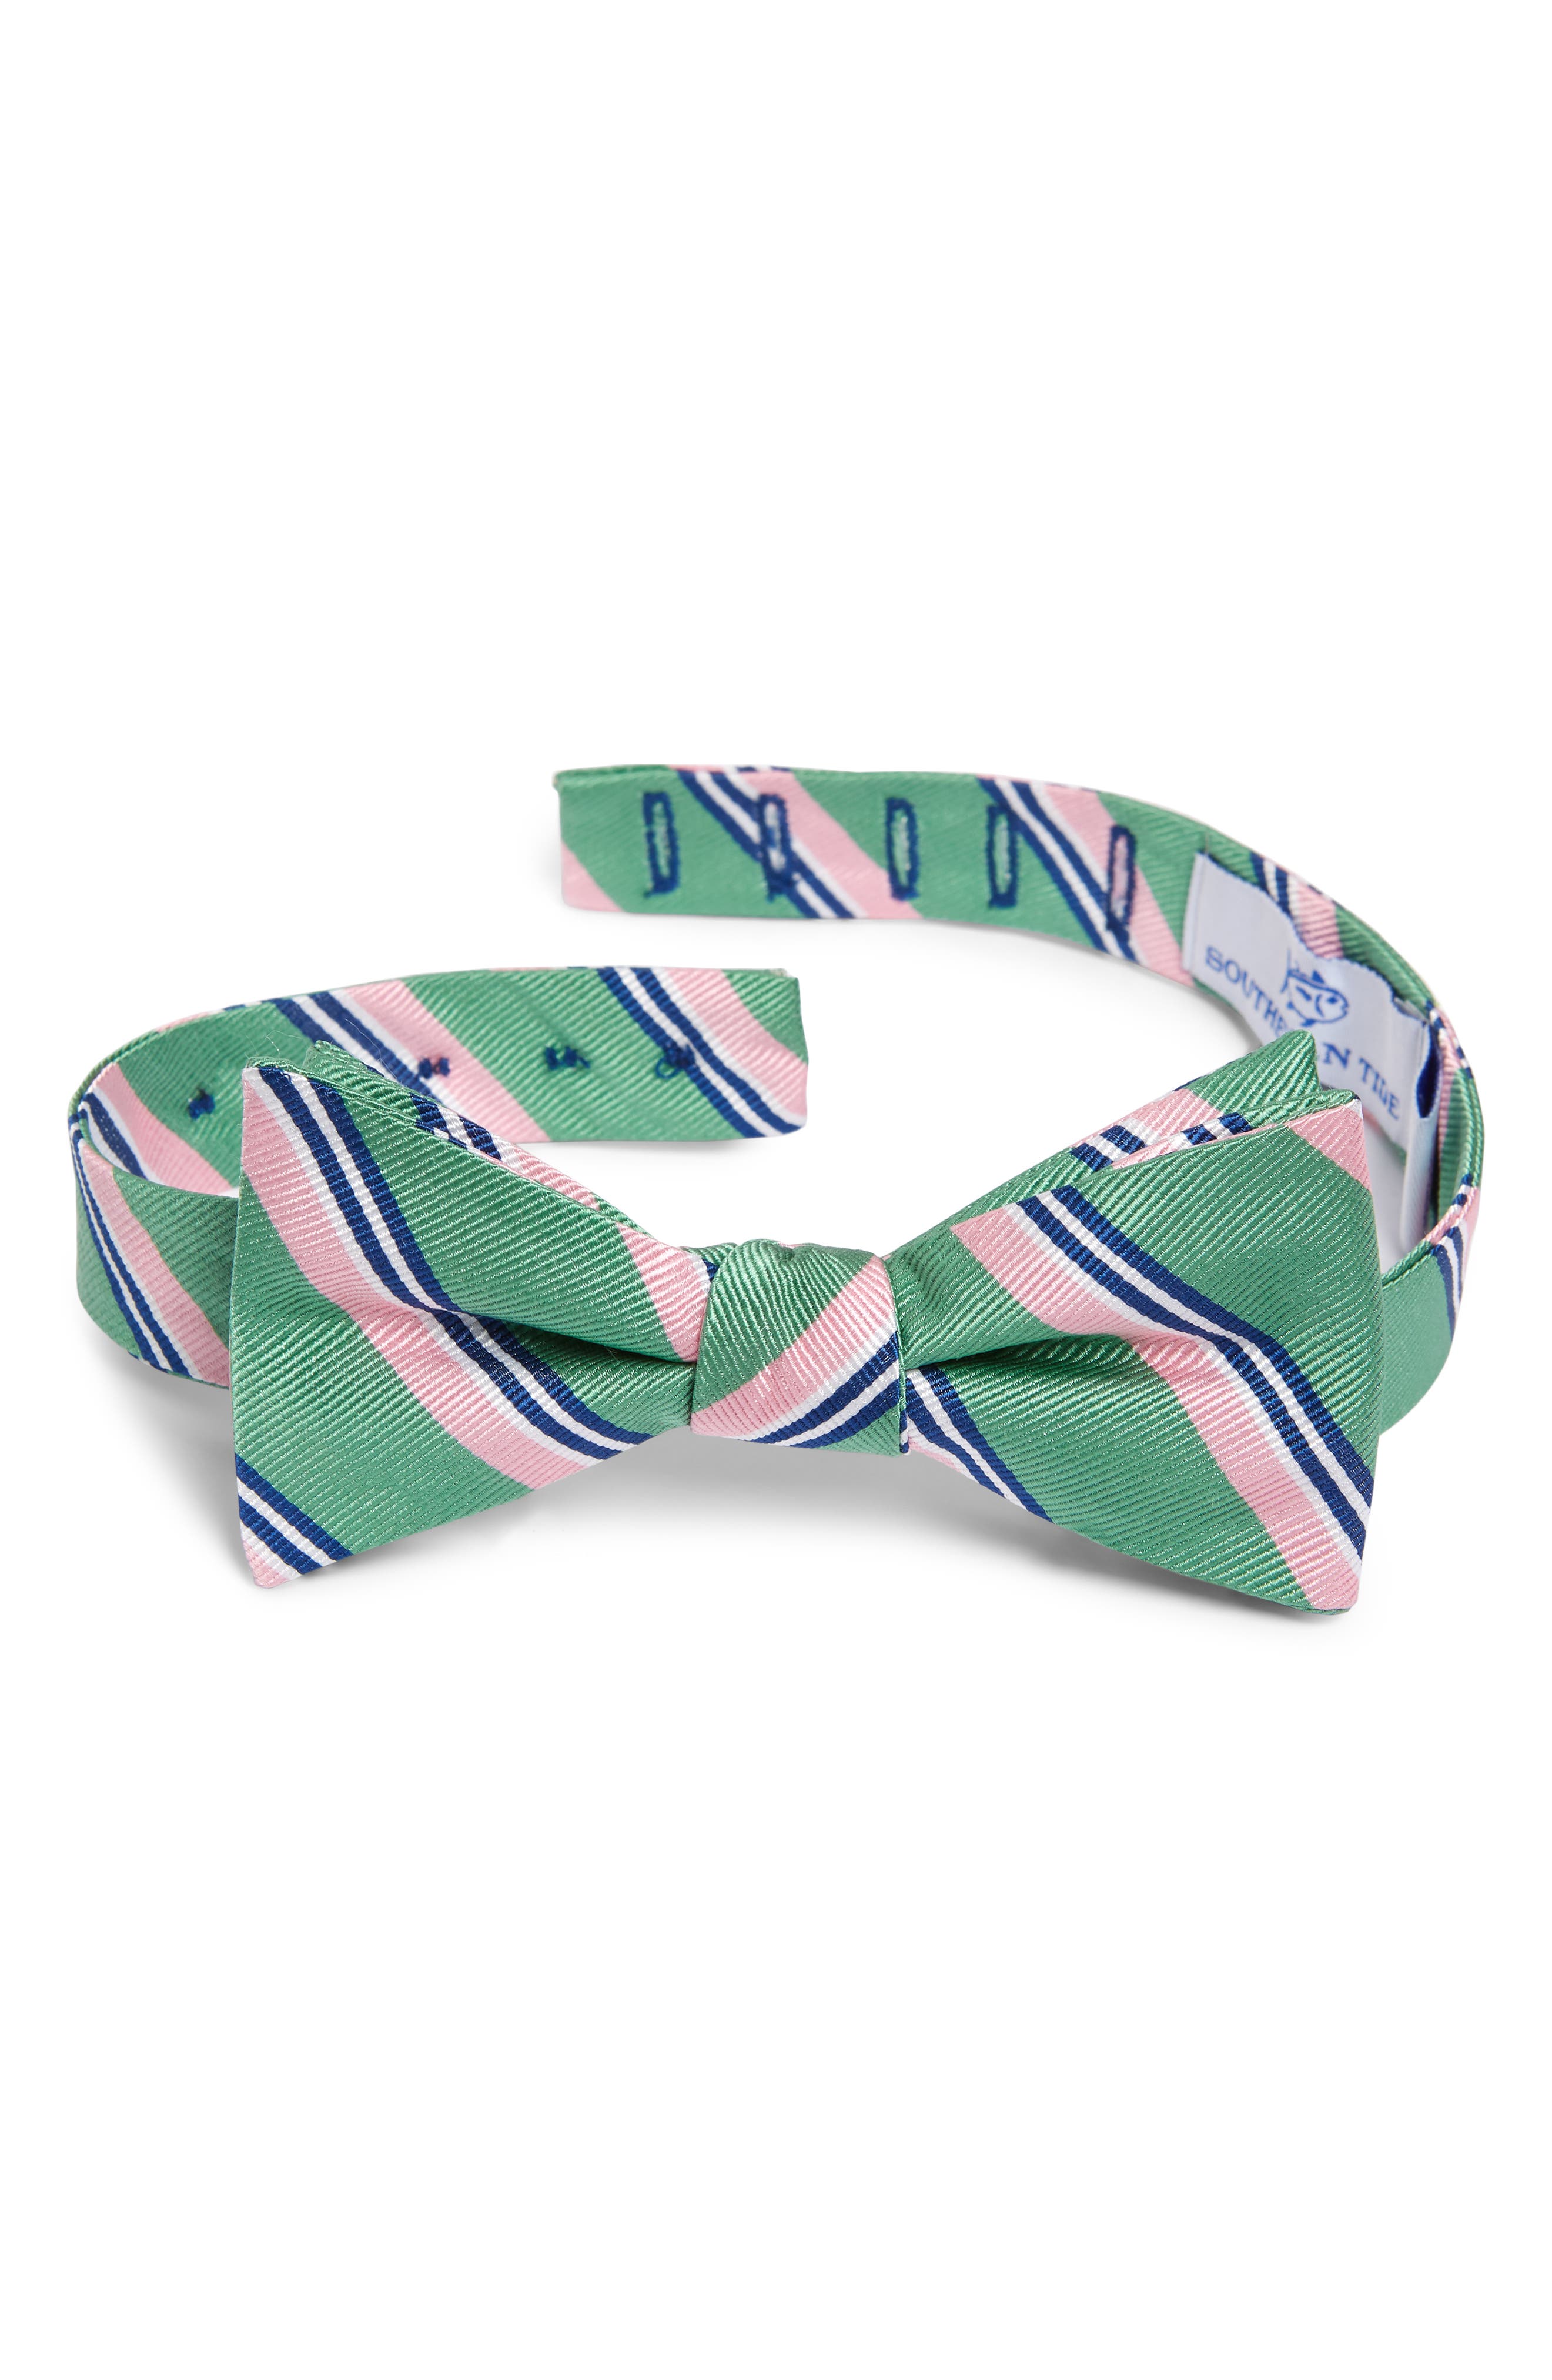 1920s Bow Ties | Gatsby Tie, Art Deco Tie